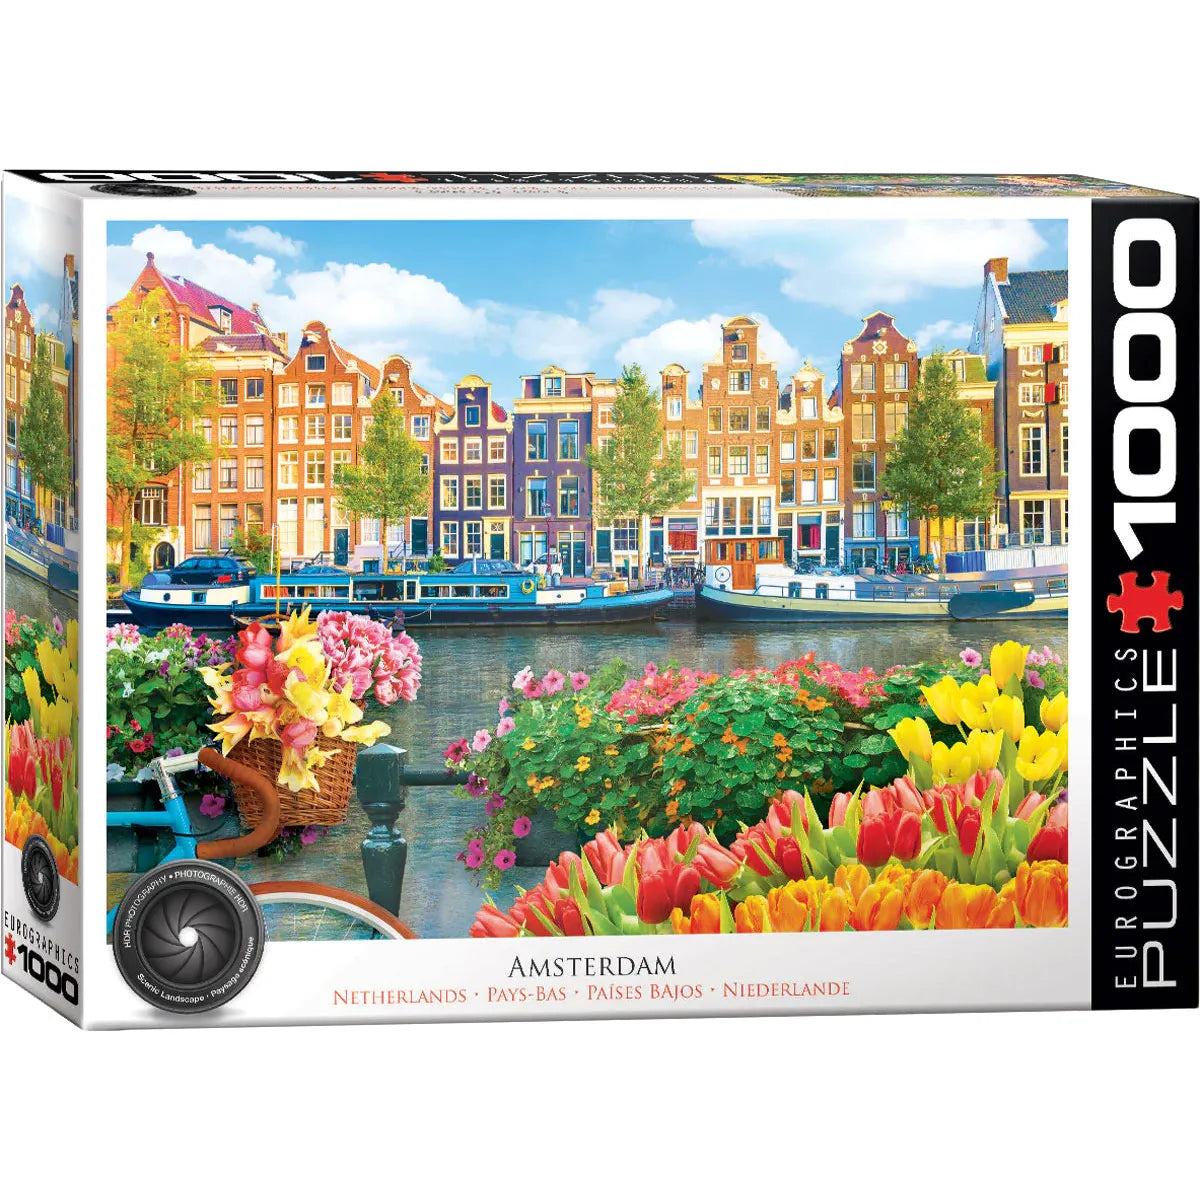 Amsterdam, Netherlands 1000PC Puzzle  Eurographics - Zinnias Gift Boutique